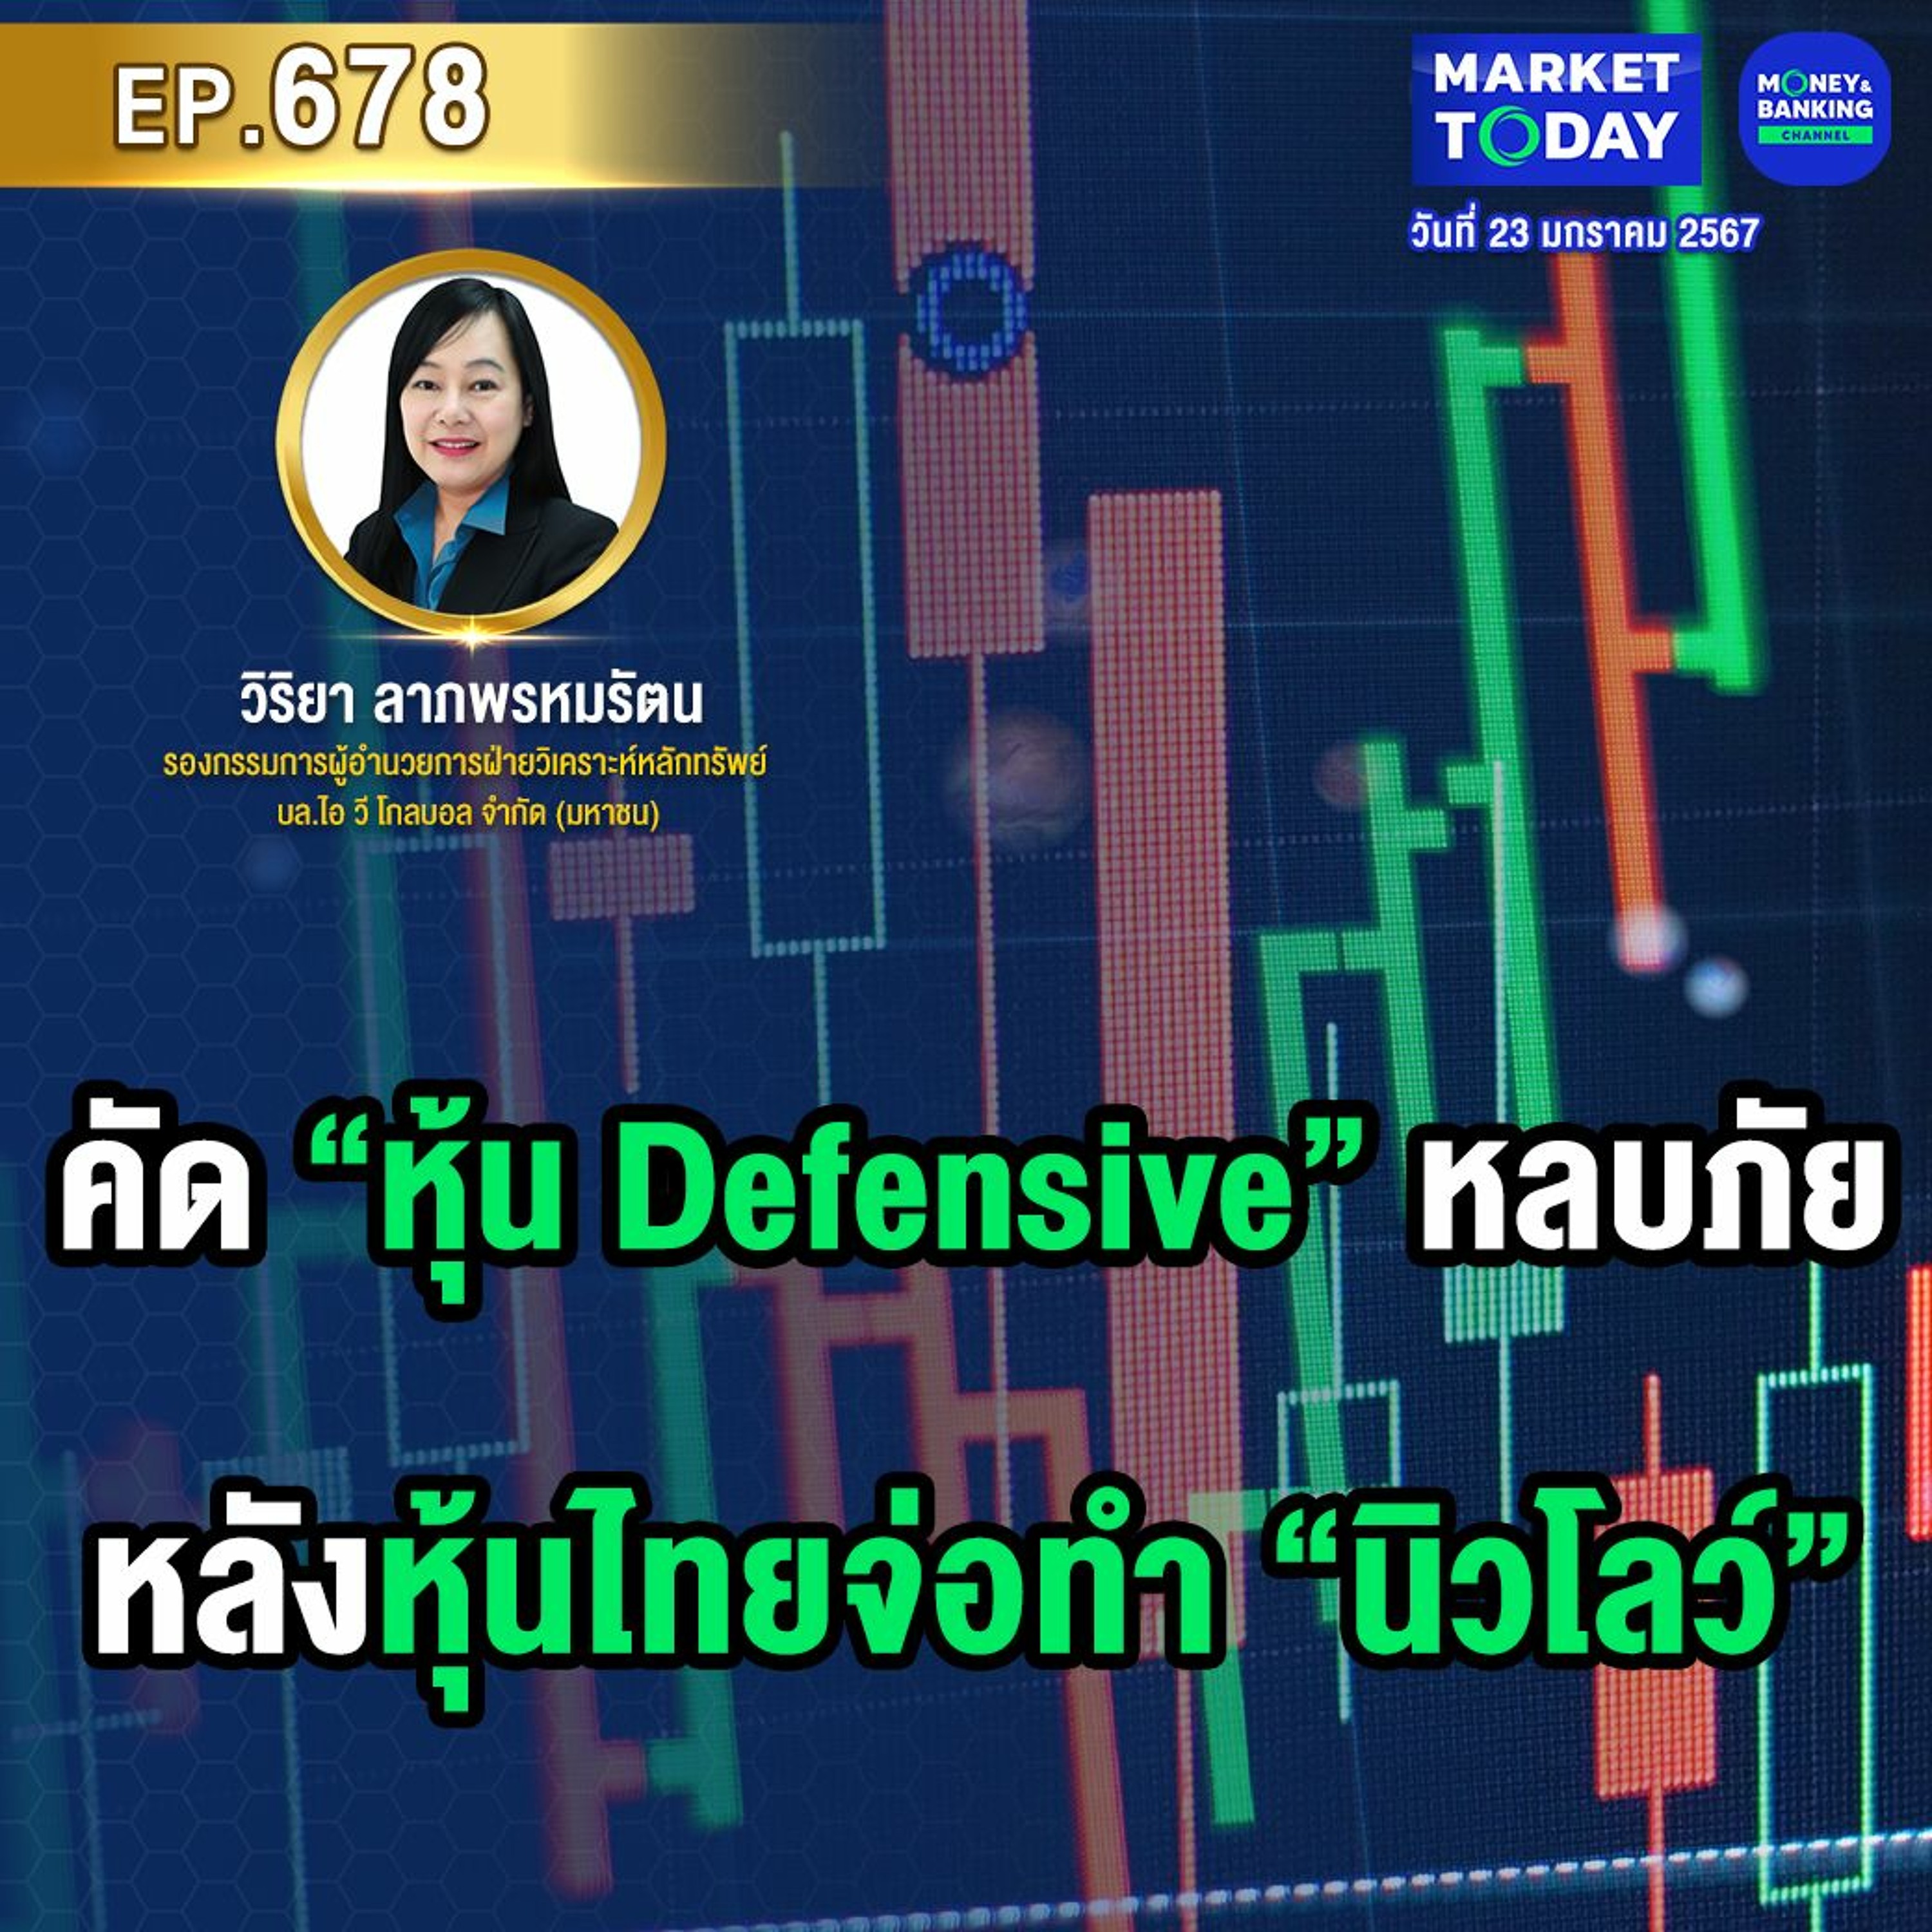 Market Today EP.678 | คัด “หุ้น Defensive” หลบภัย หลังหุ้นไทยจ่อทำ “นิวโลว์”